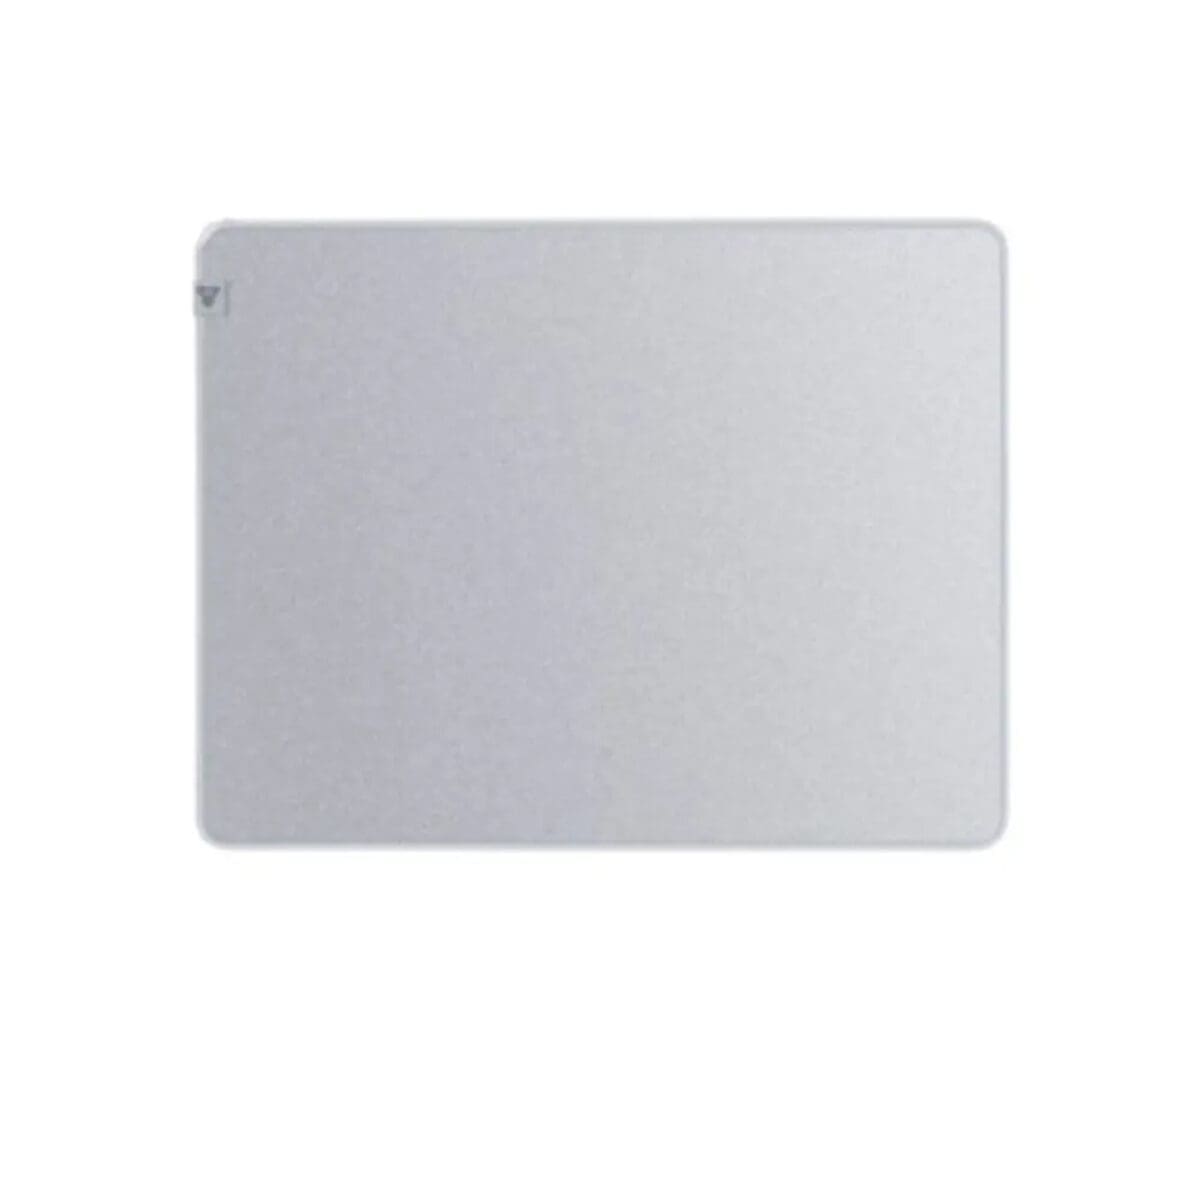 Fantech MP453 AGILE White (Large) | Mousepad